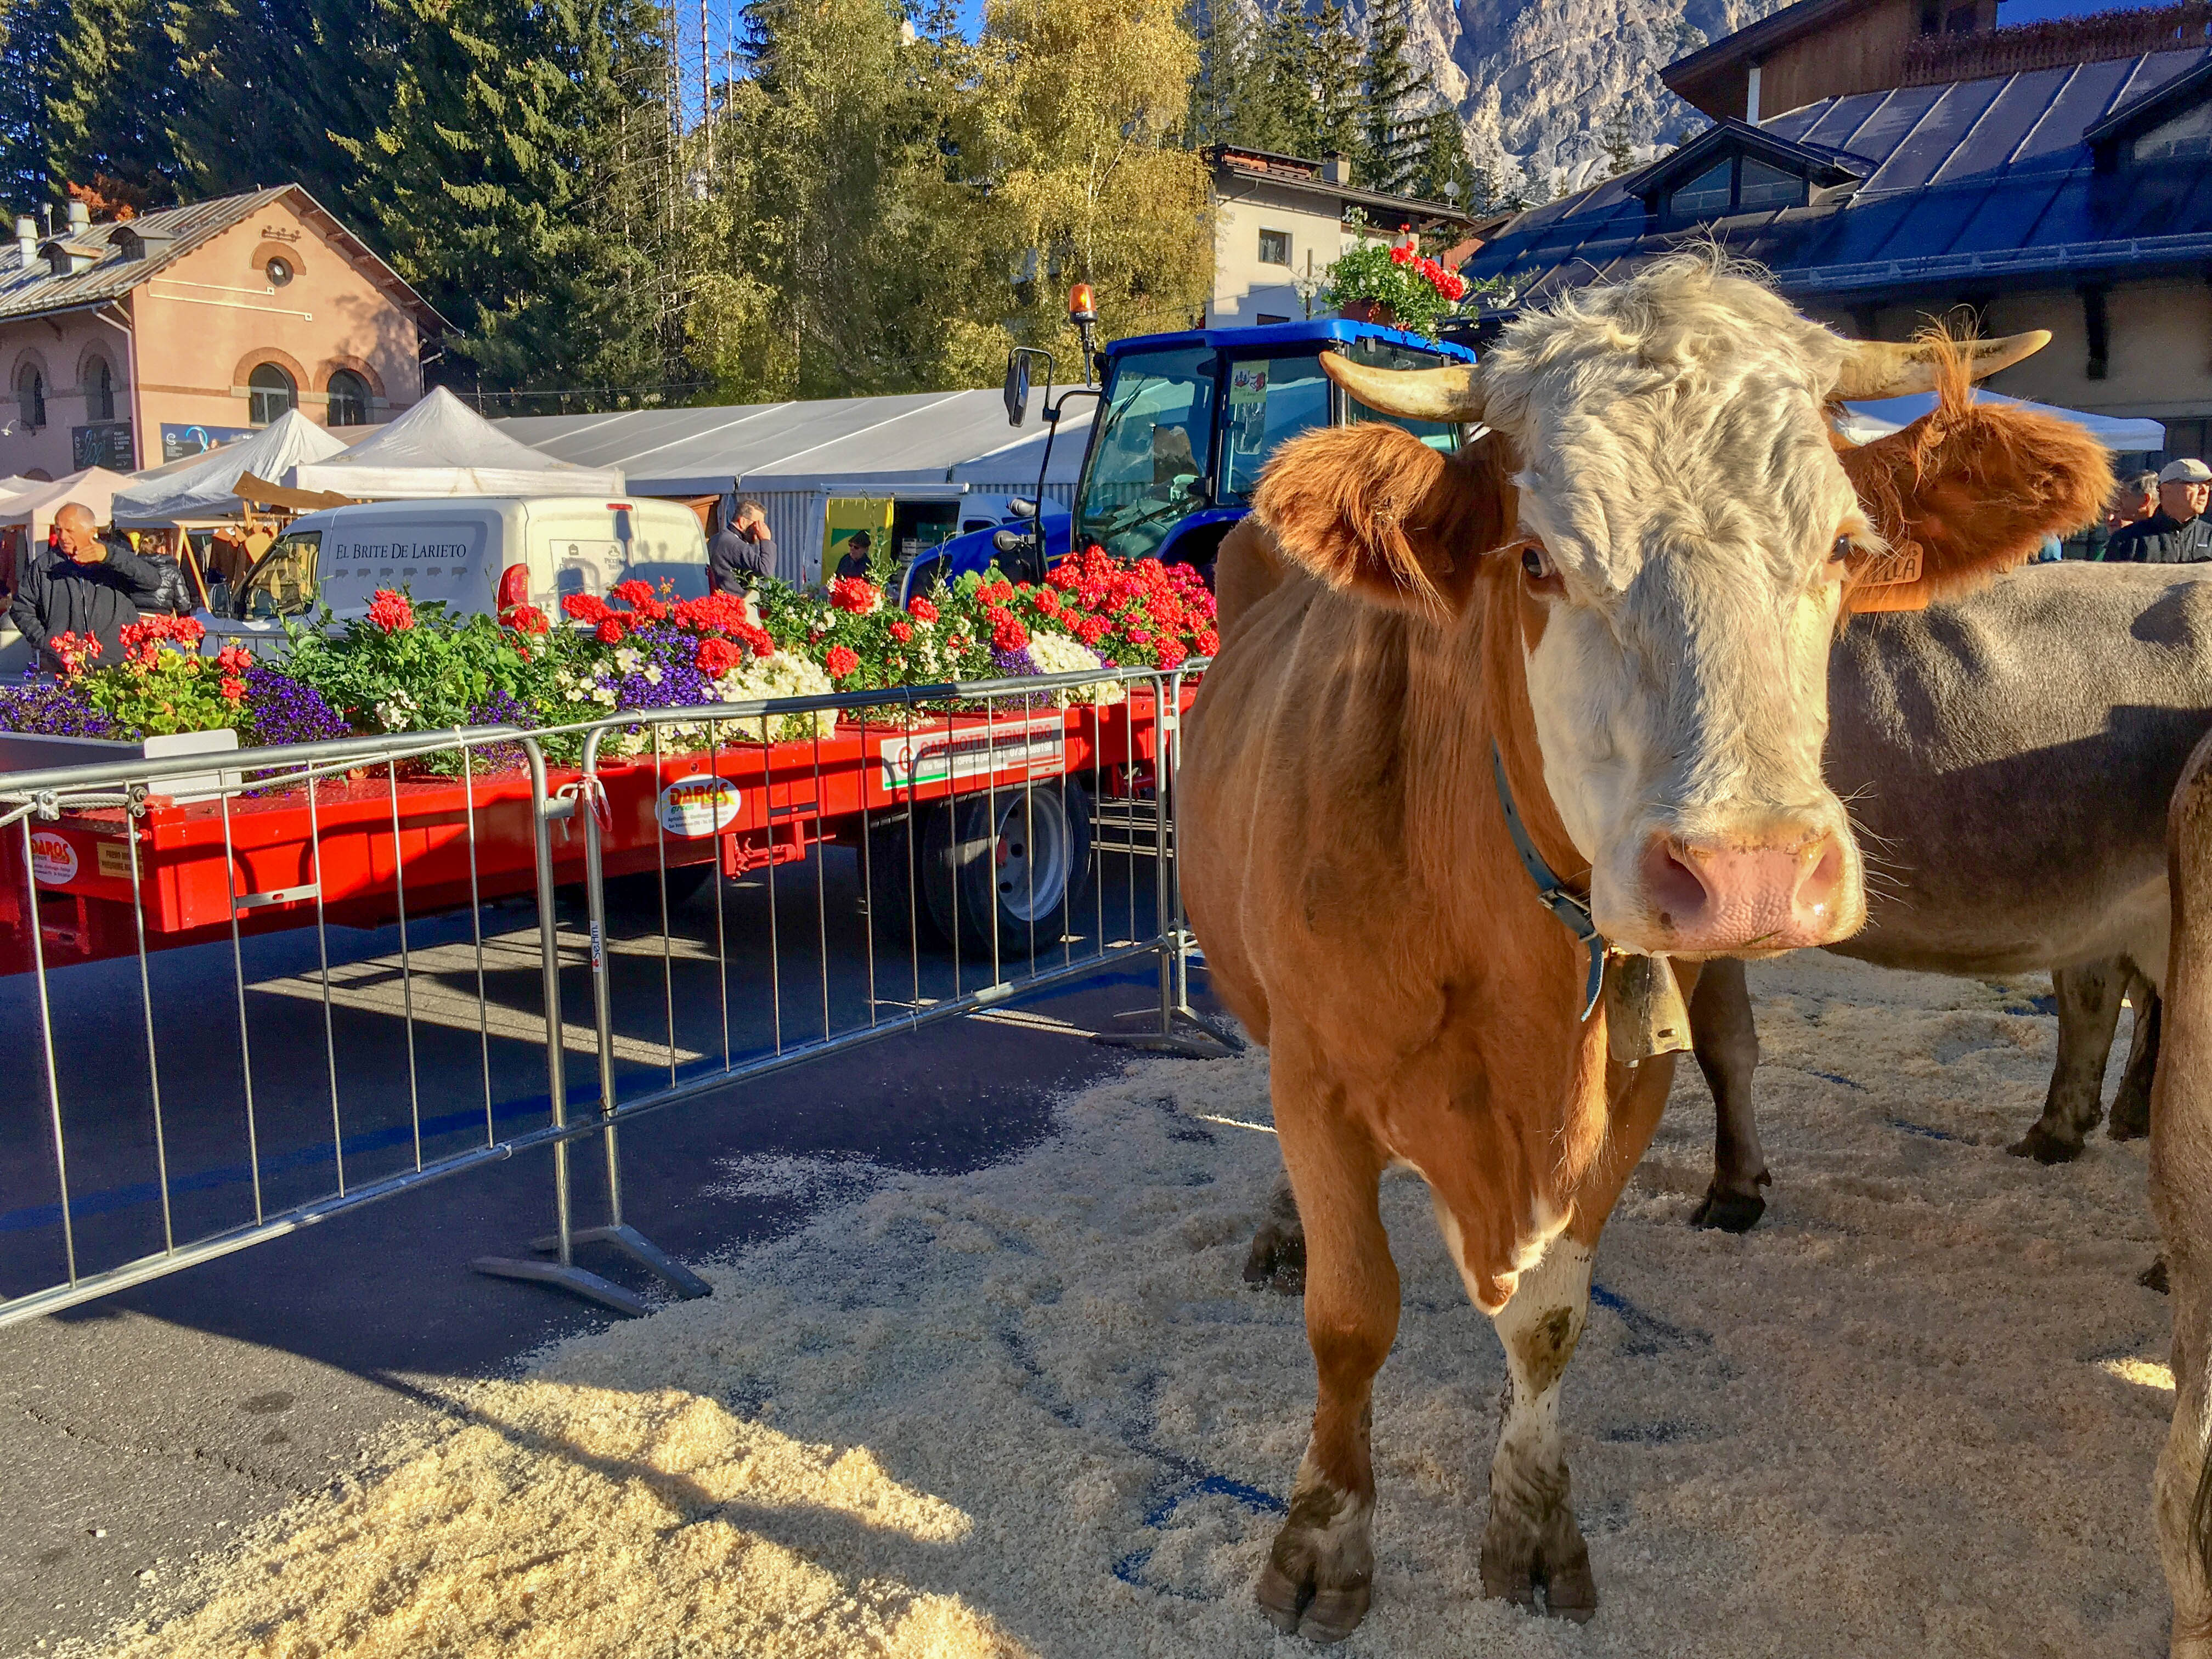 Festa del Desmontea, Cow Festival in Cortina in October